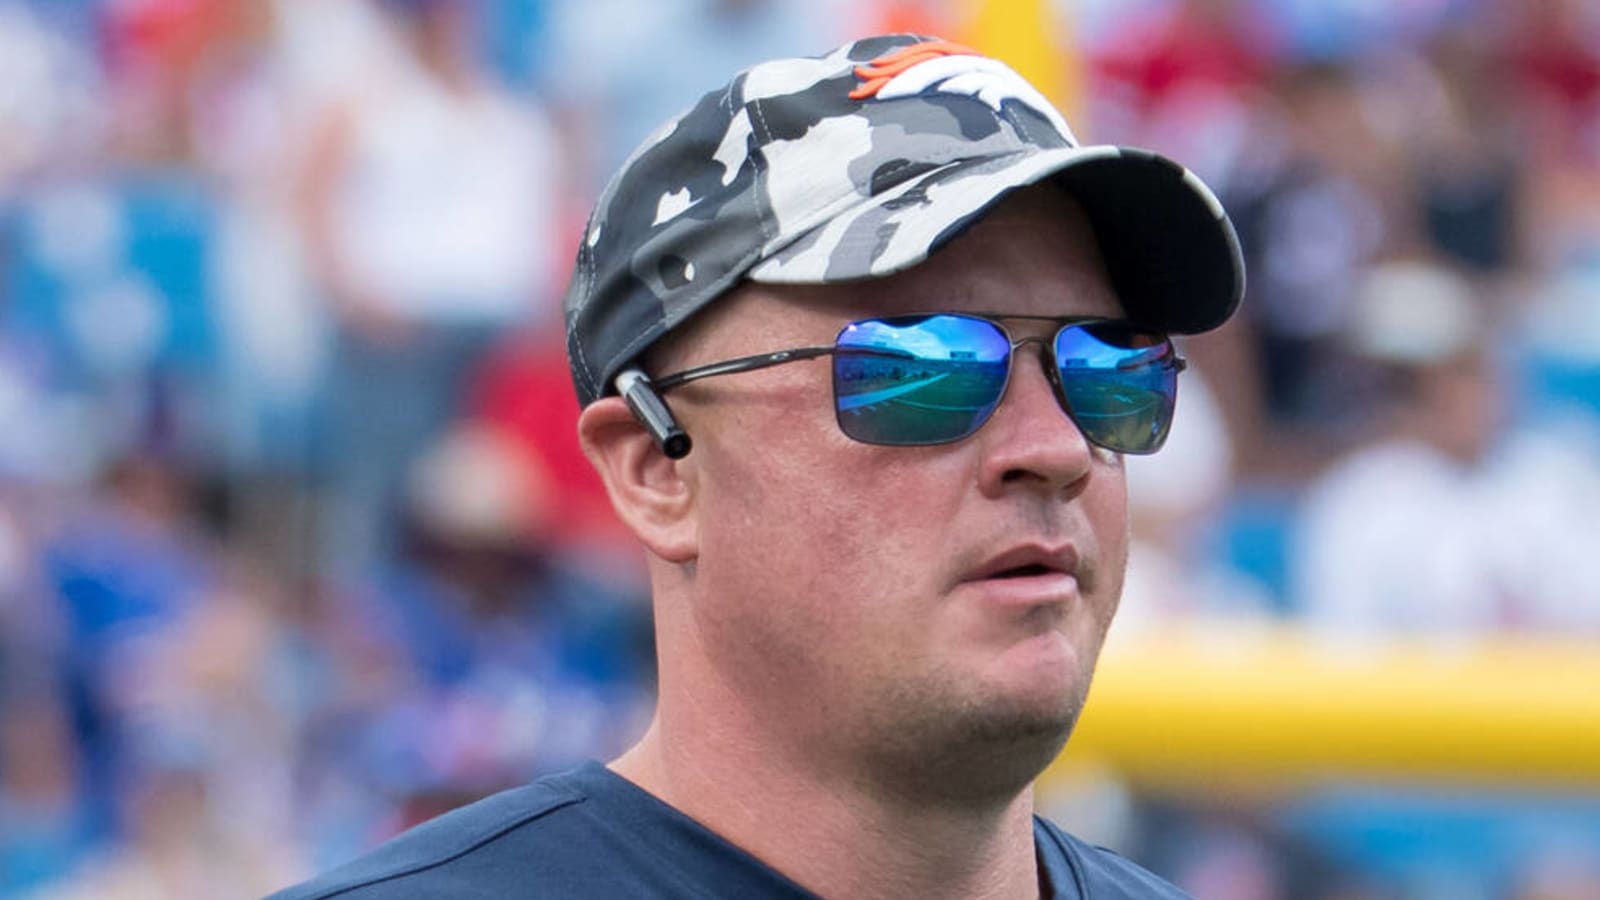 'A hot mess': Denver columnist tears into Broncos coach Hackett